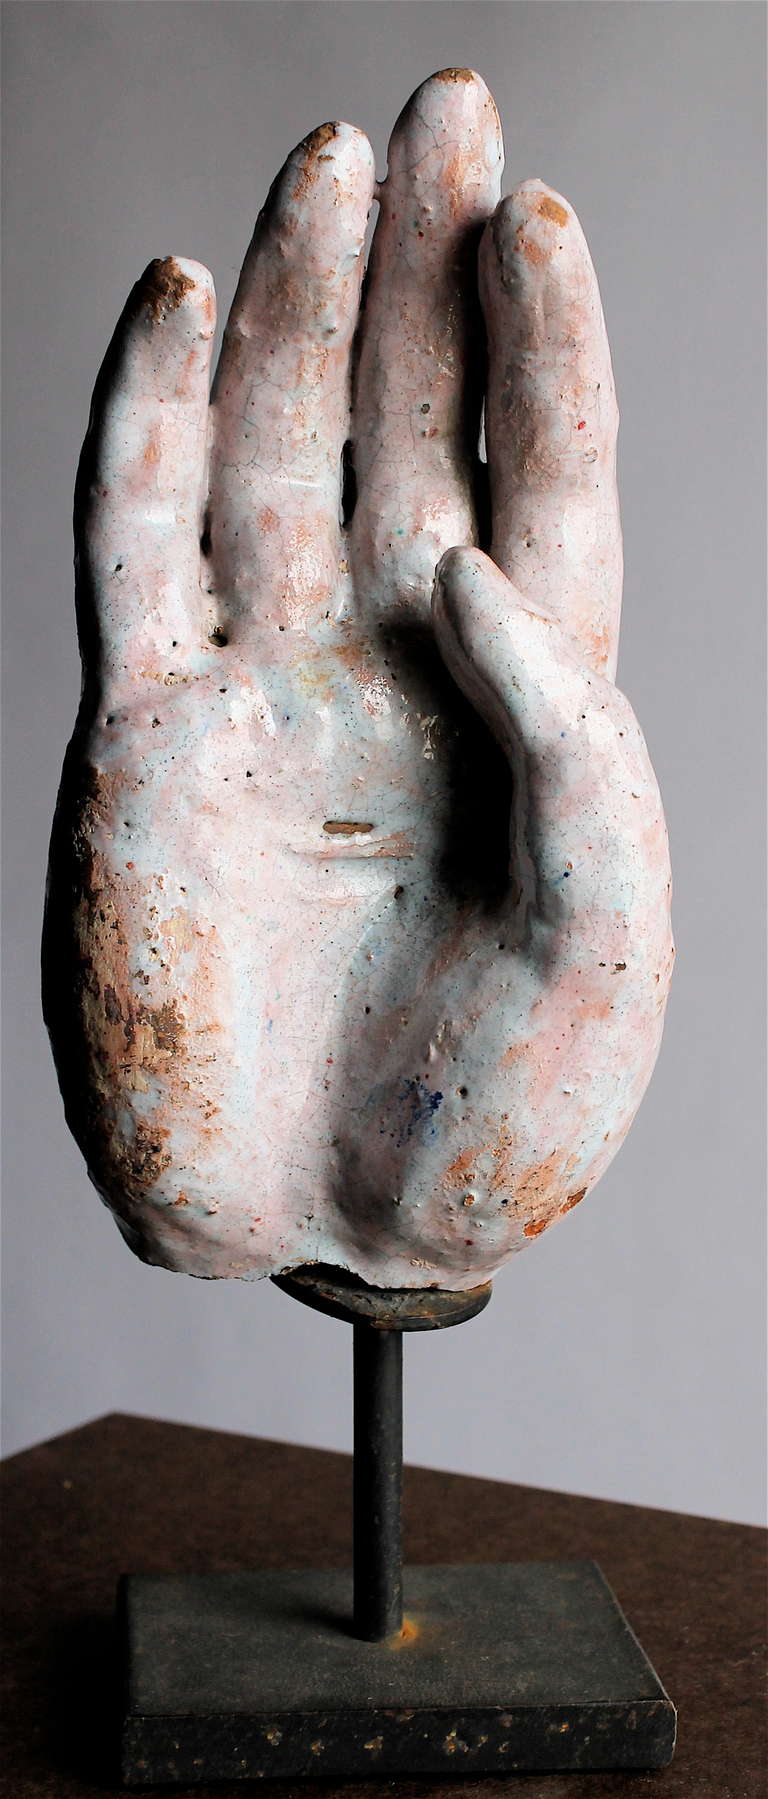 Vienna Secession Vally Wieselthier Ceramic Hand Fragment from the Wiener Werkstatte showroom NYC